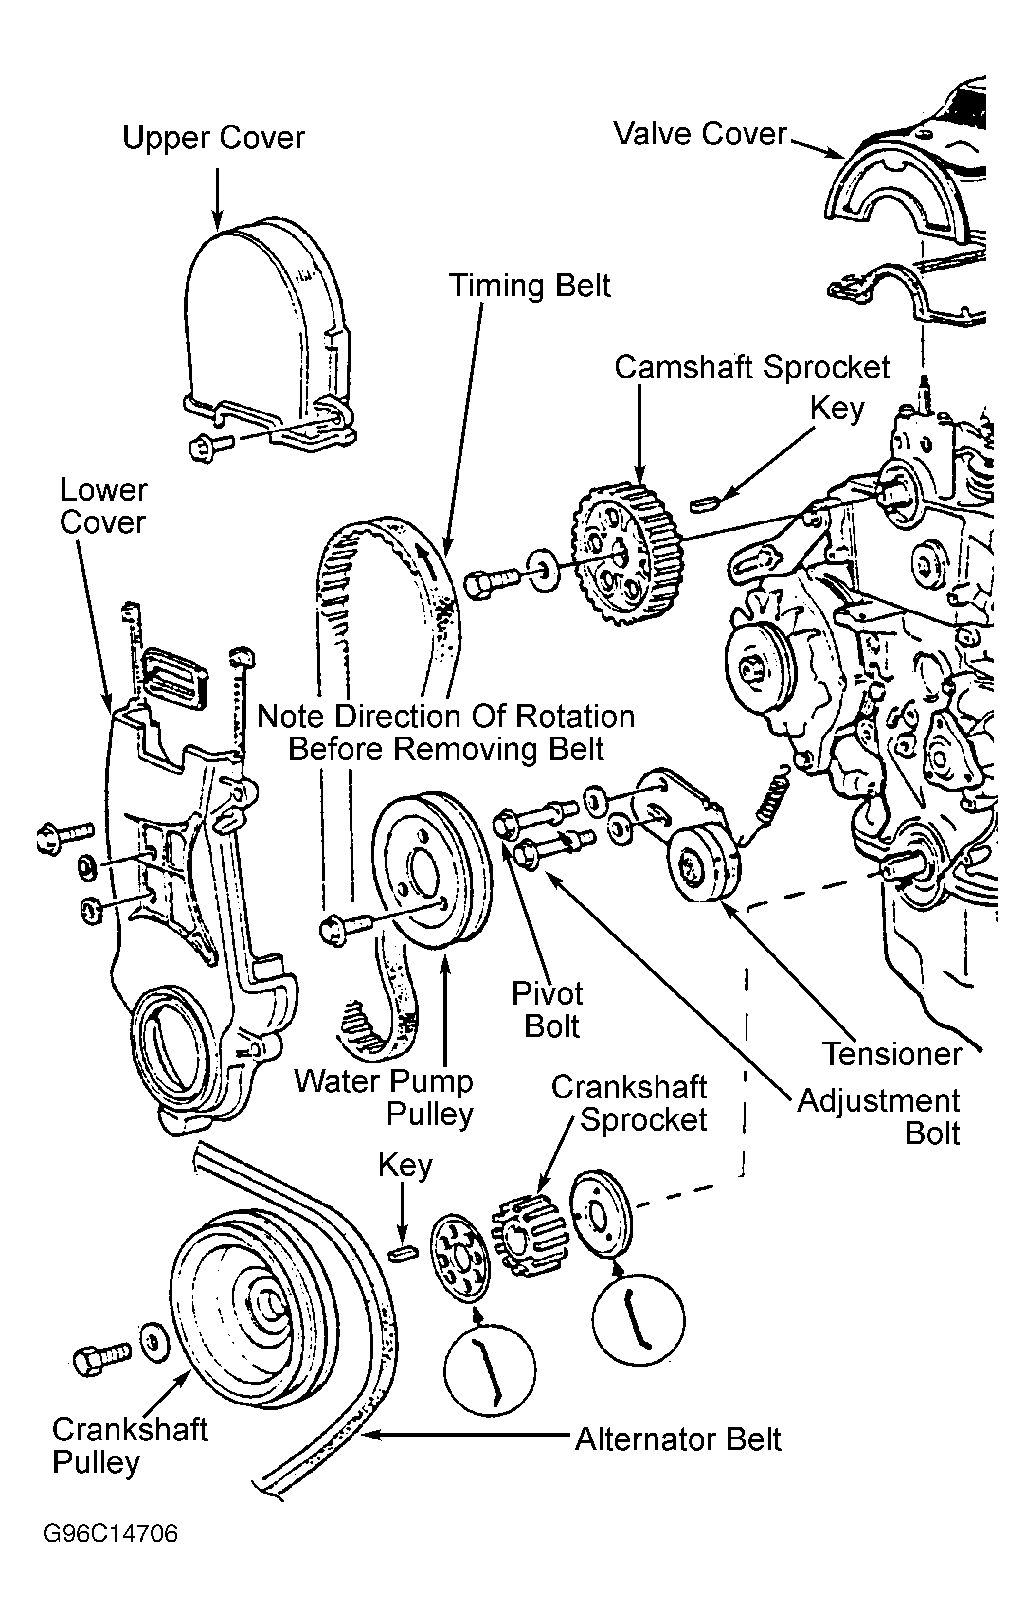 1989 Honda Prelude Si Wiring Diagram - Wiring Diagram Schema